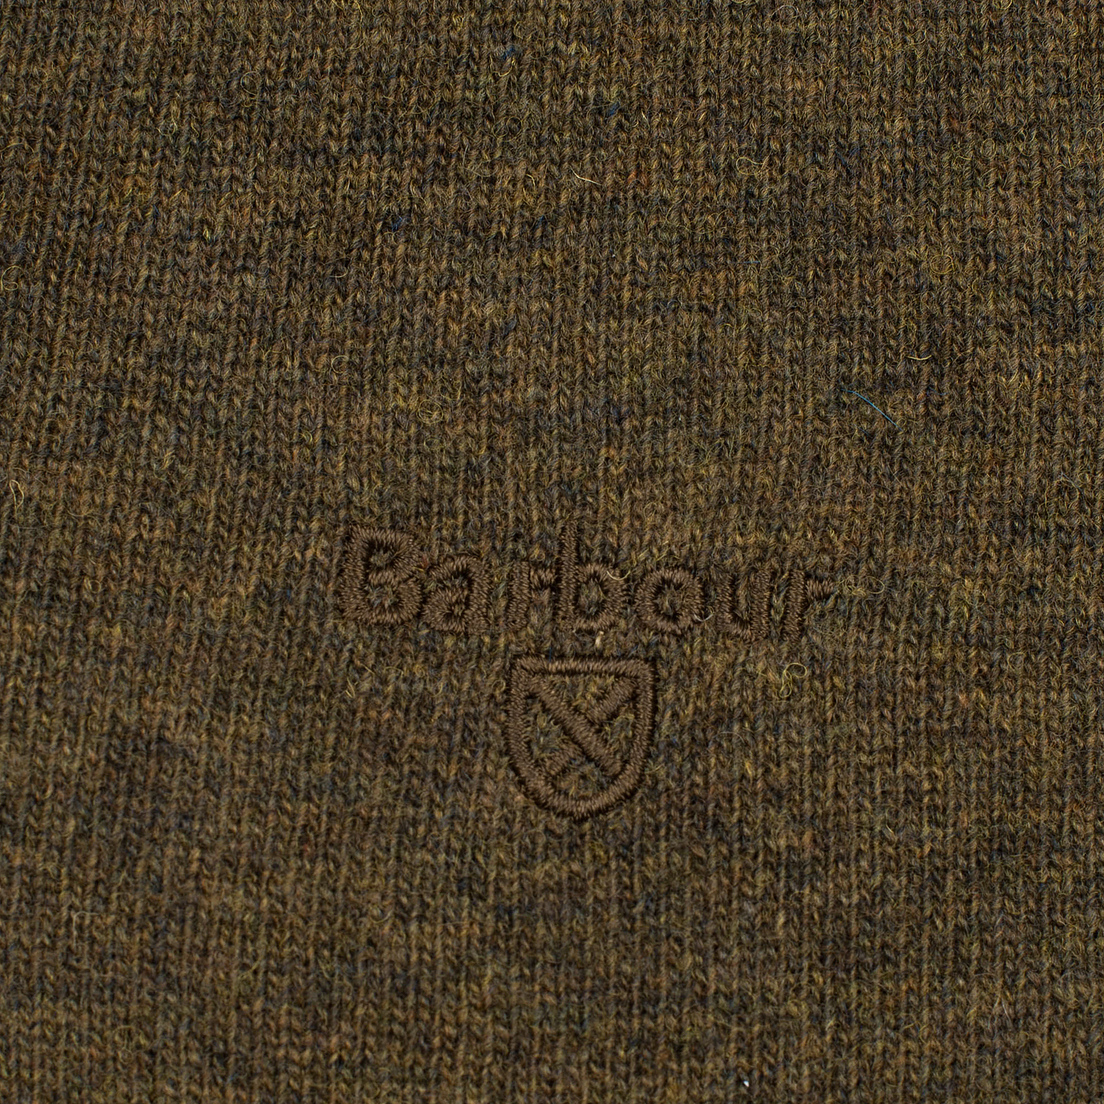 Barbour Мужской свитер Essential Lambswool V-Neck